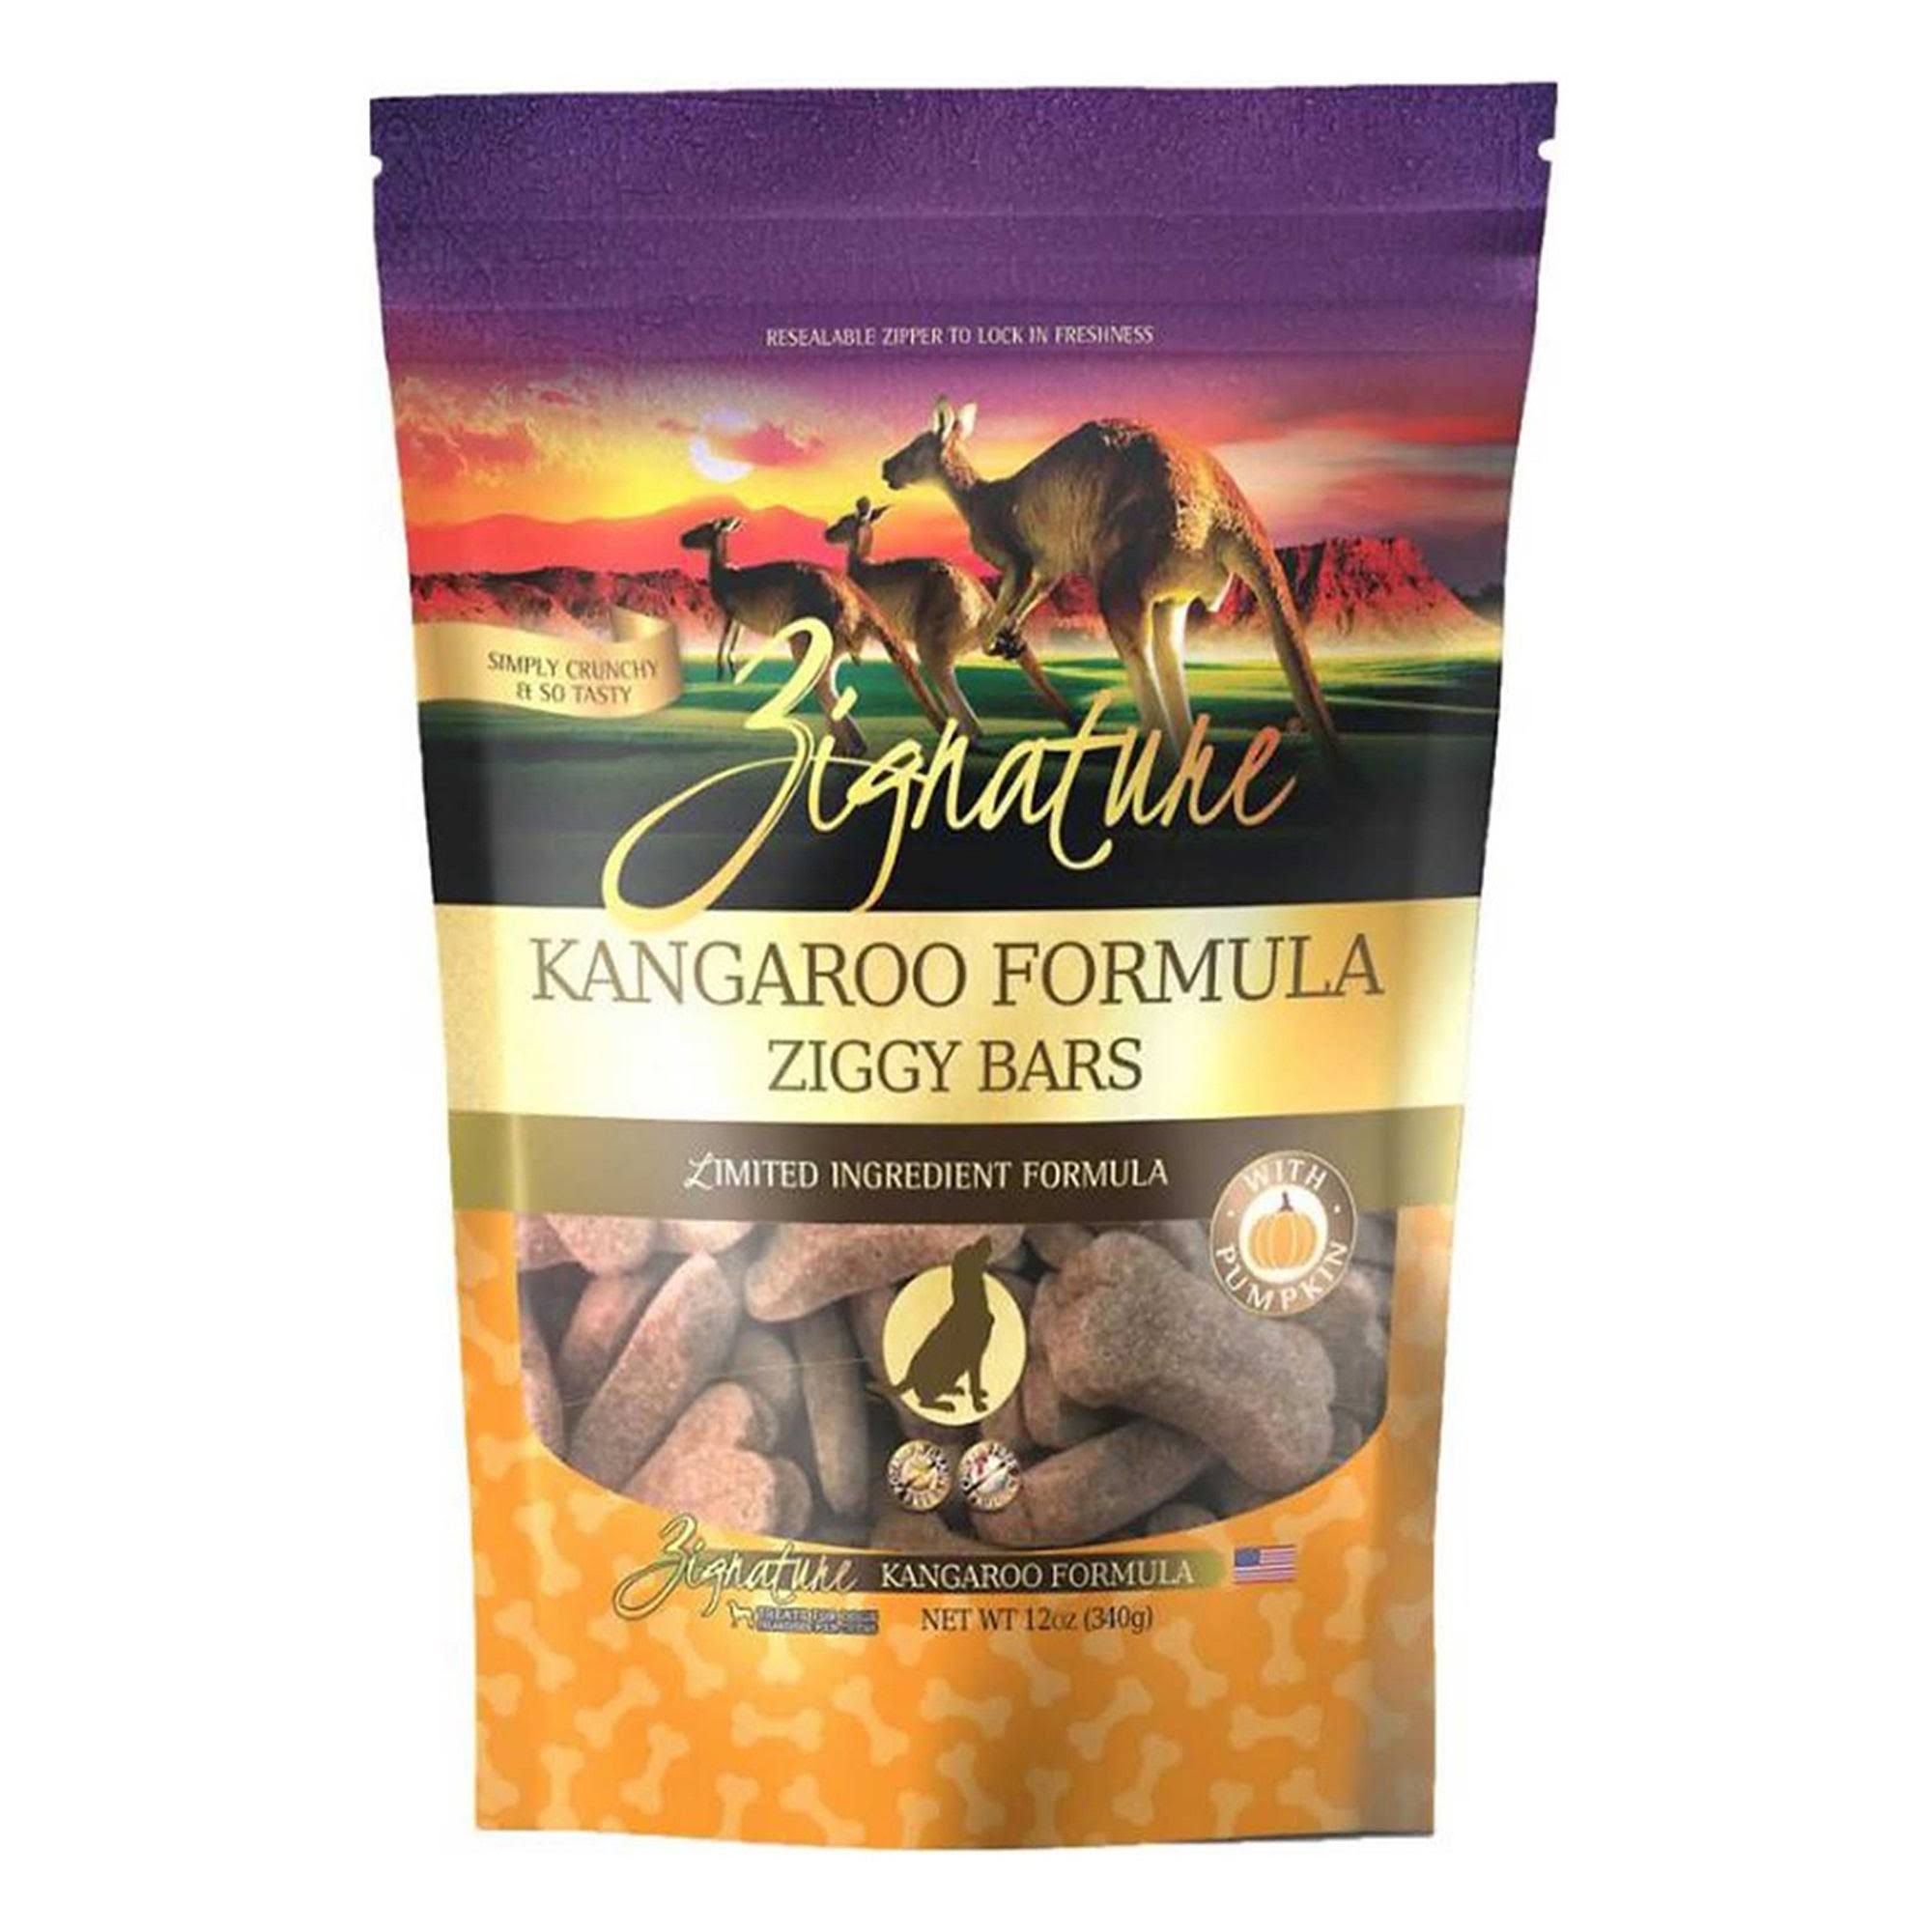 Zignature Limited Ingredient Kangaroo Formula Ziggy Bars 12 oz